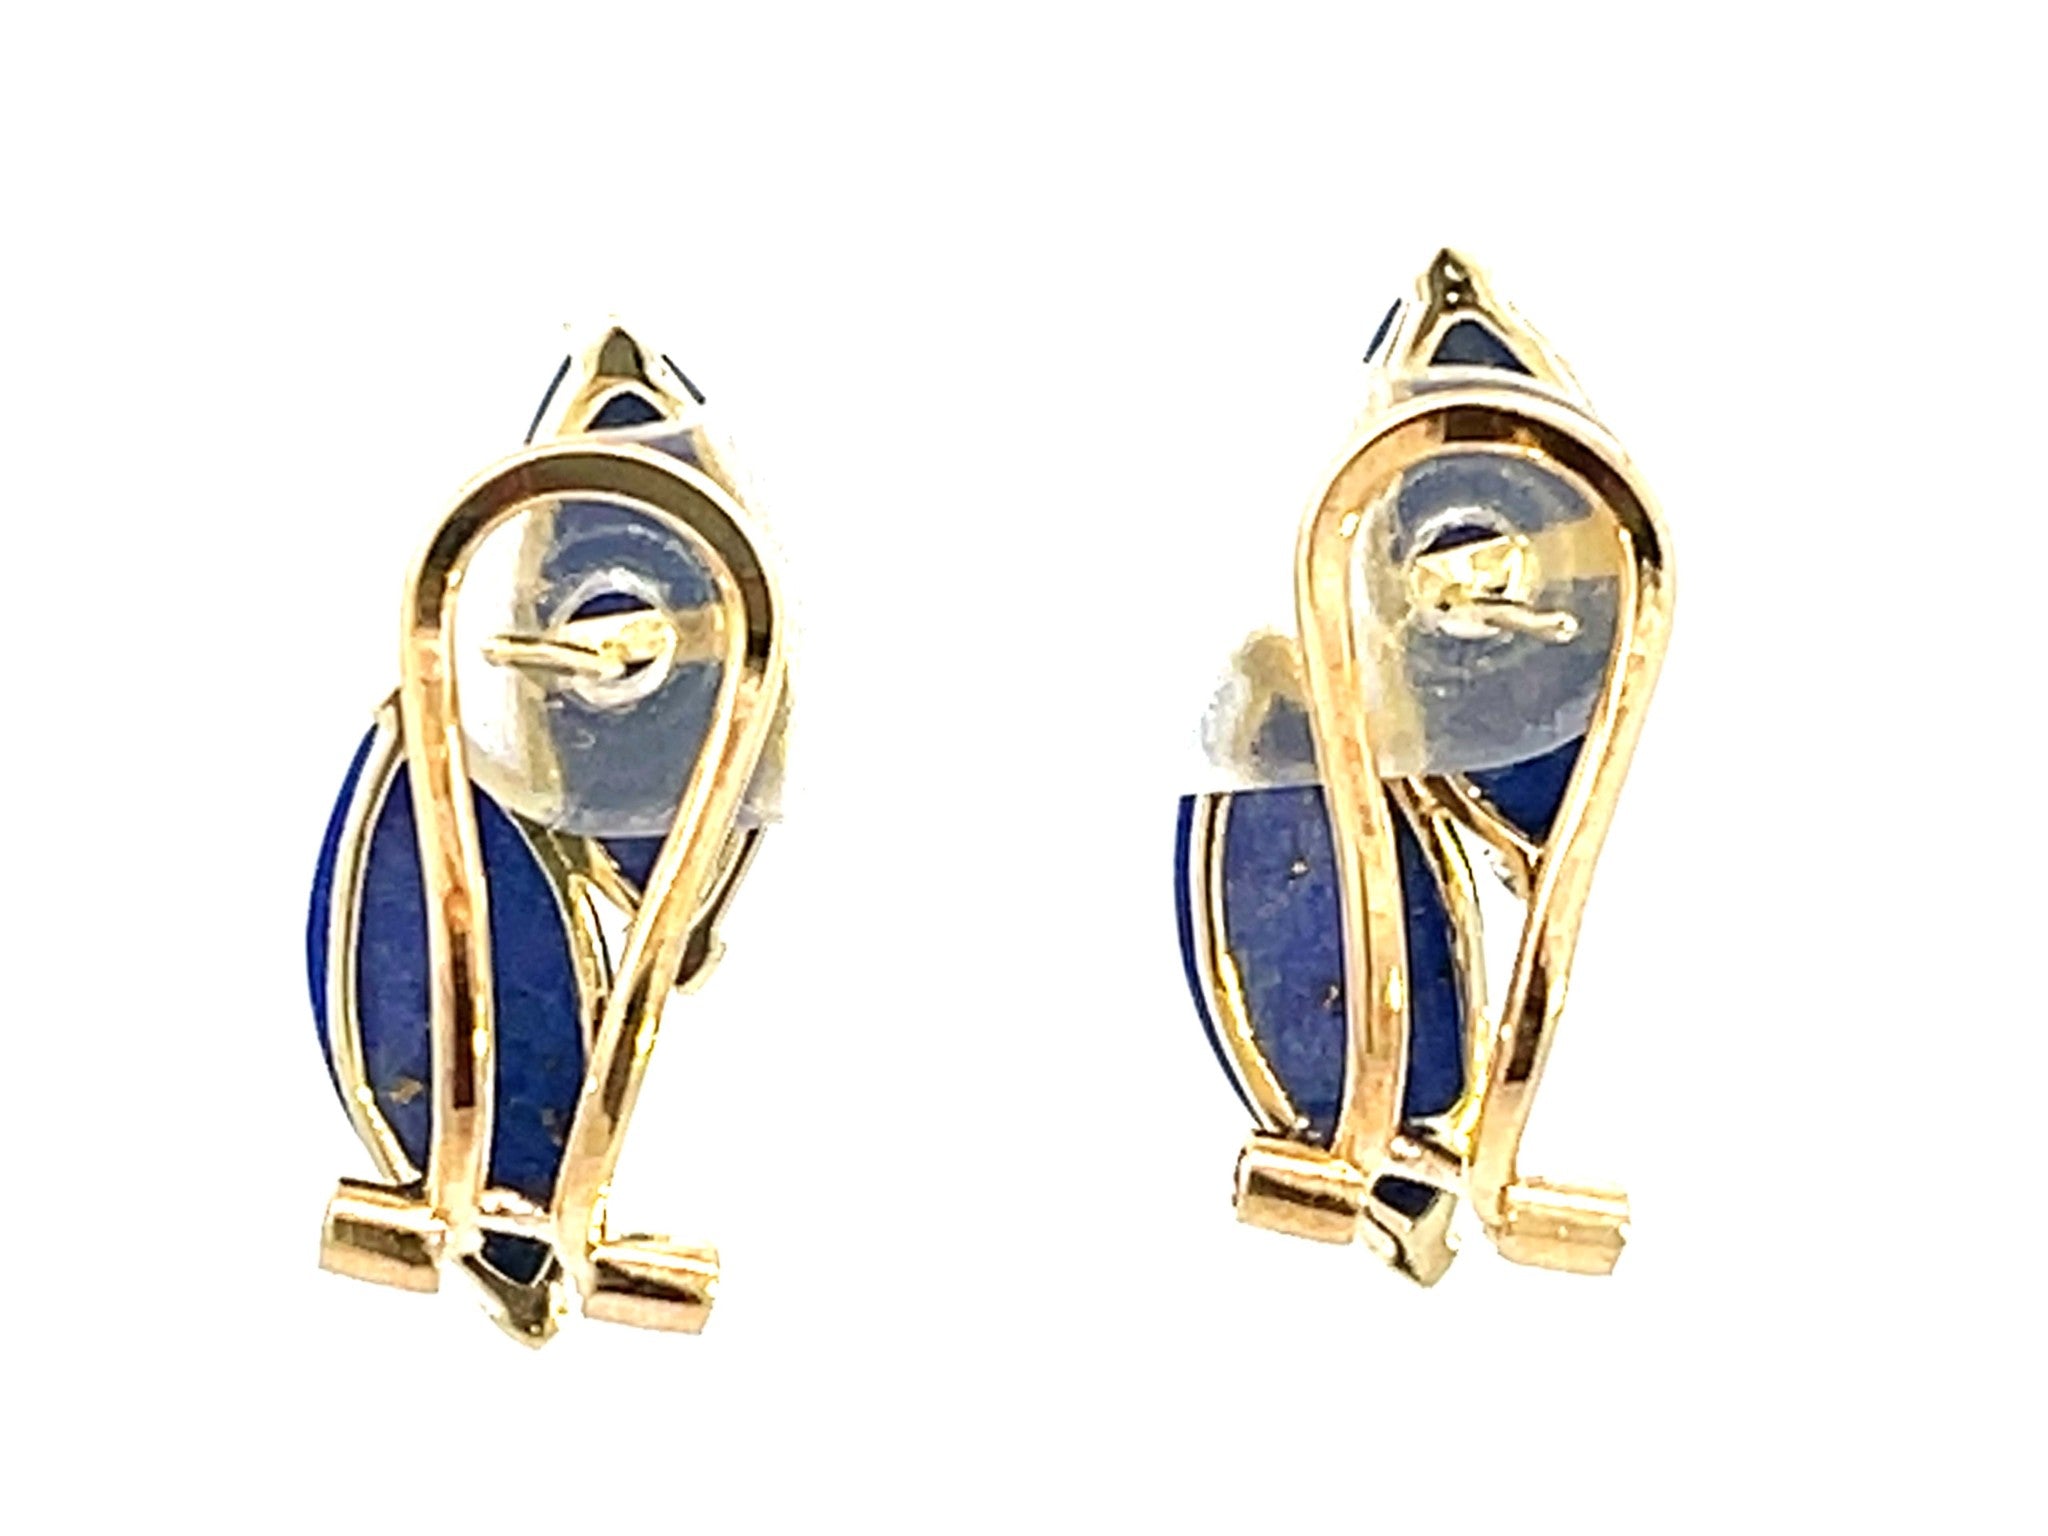 Double Marquise Lapis Lazuli 14K Yellow Gold Earrings